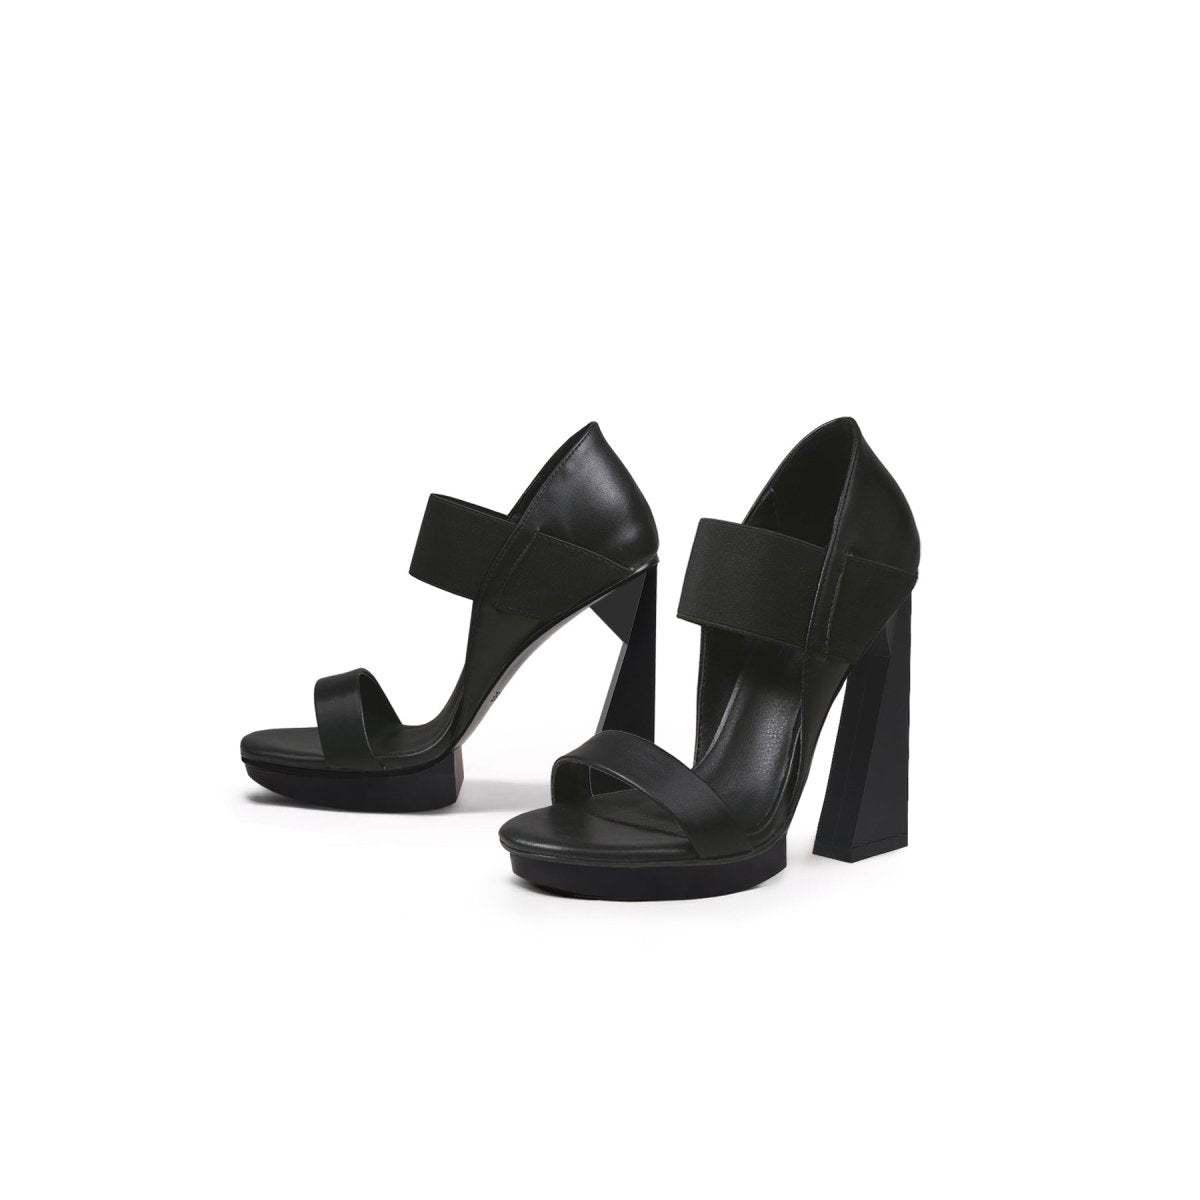 Suki Open-toe Trape-heel Black Sandals - 0cm